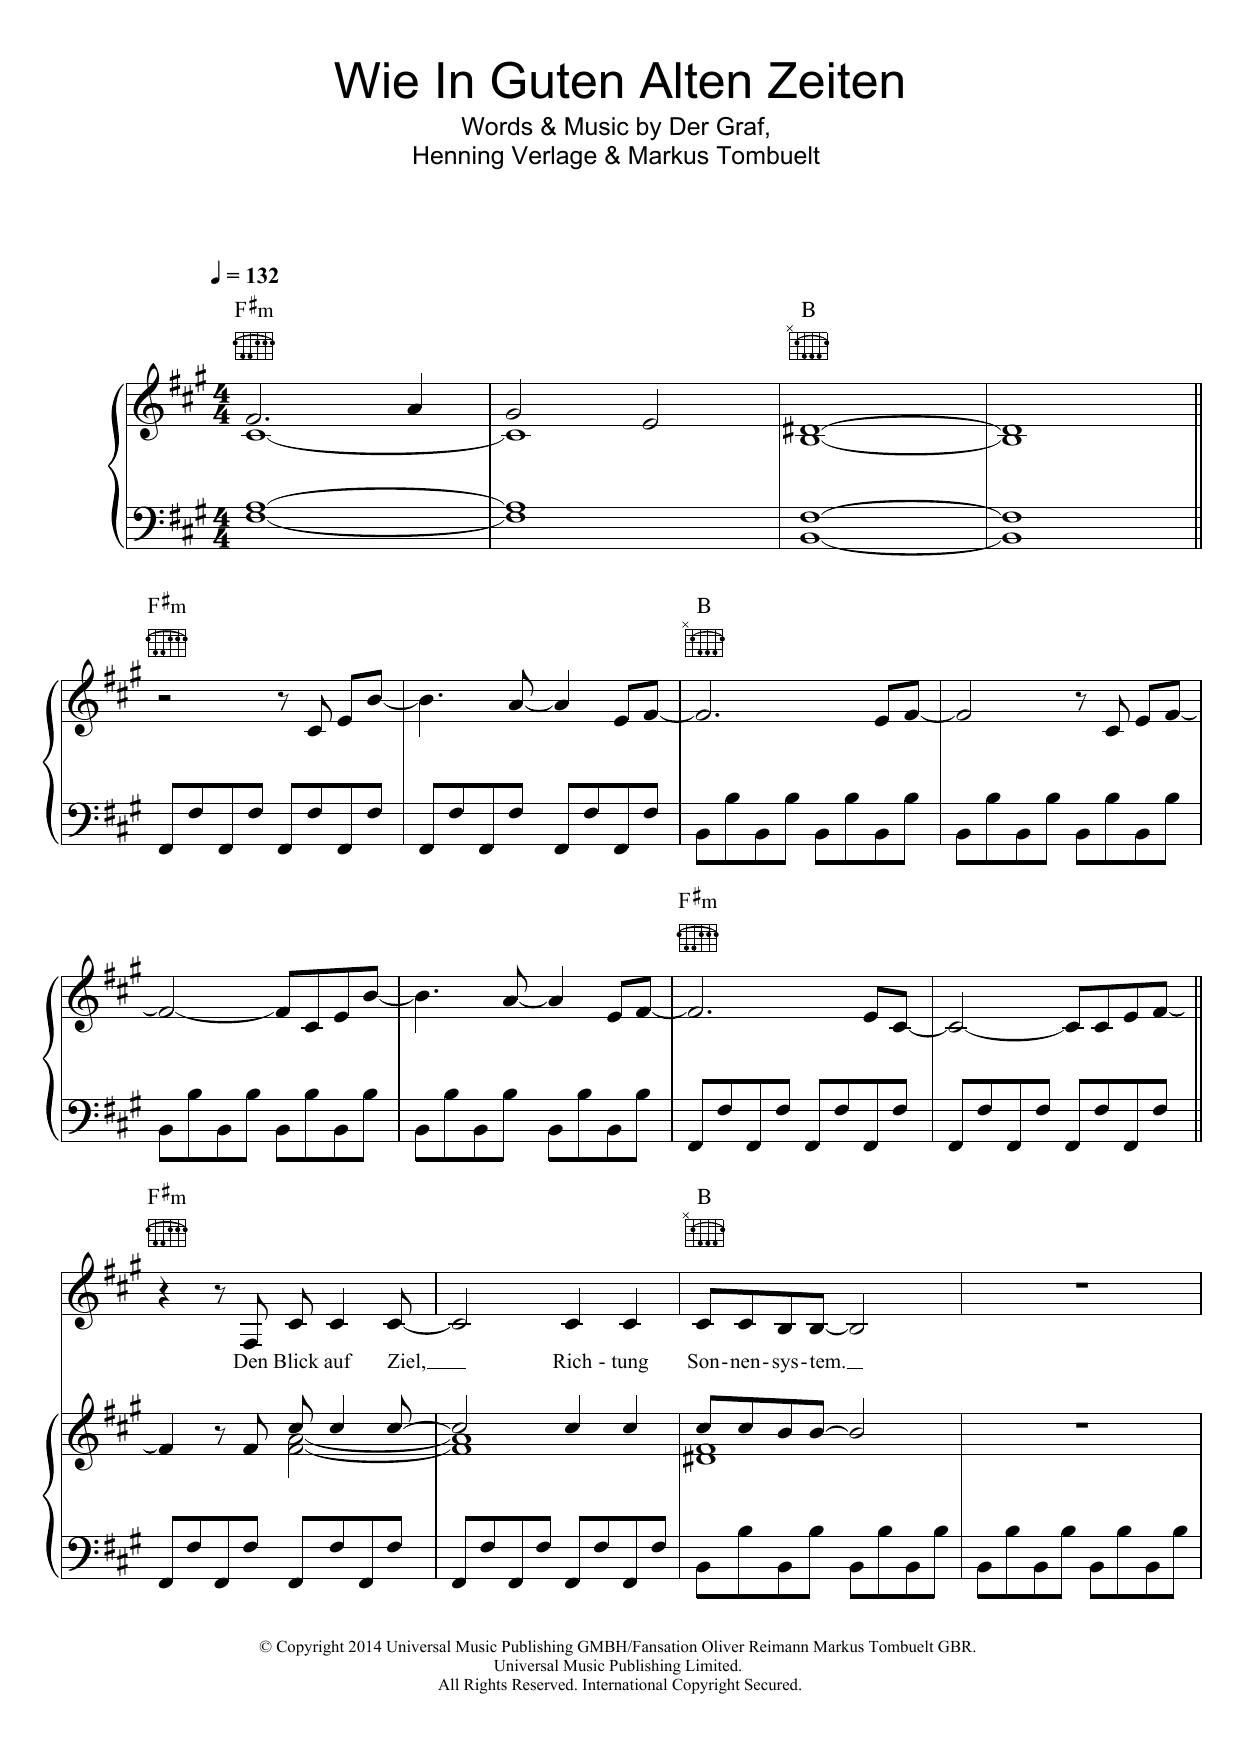 Unheilig Wie In Guten Alten Zeiten sheet music notes and chords arranged for Piano, Vocal & Guitar Chords